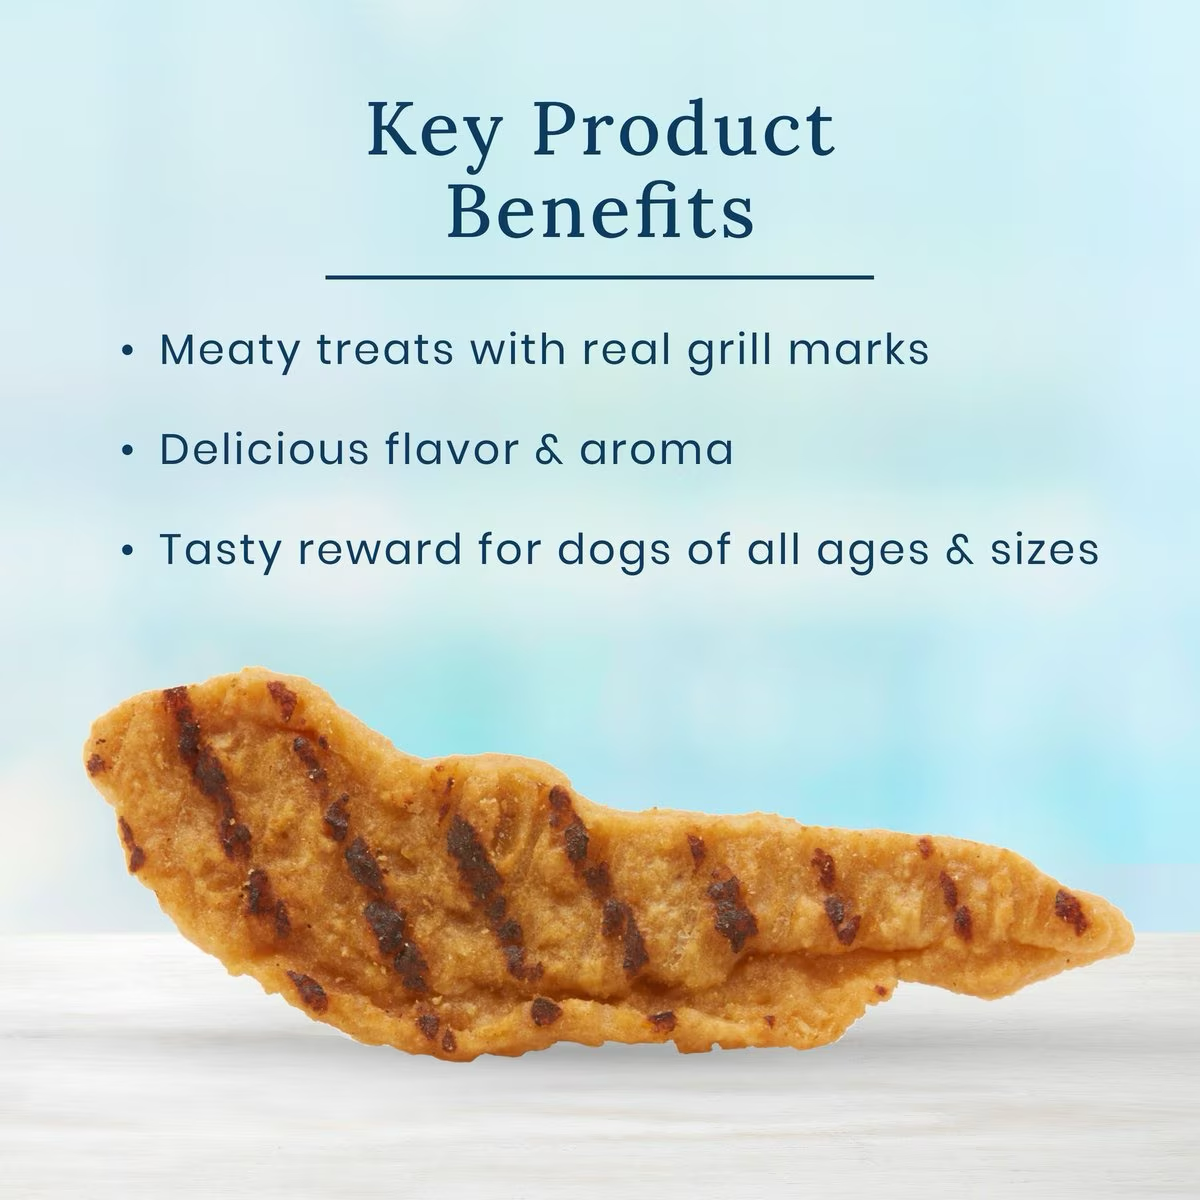 Blue True Chews Dog Treats Chicken Bacon  Dog Treats  | PetMax Canada